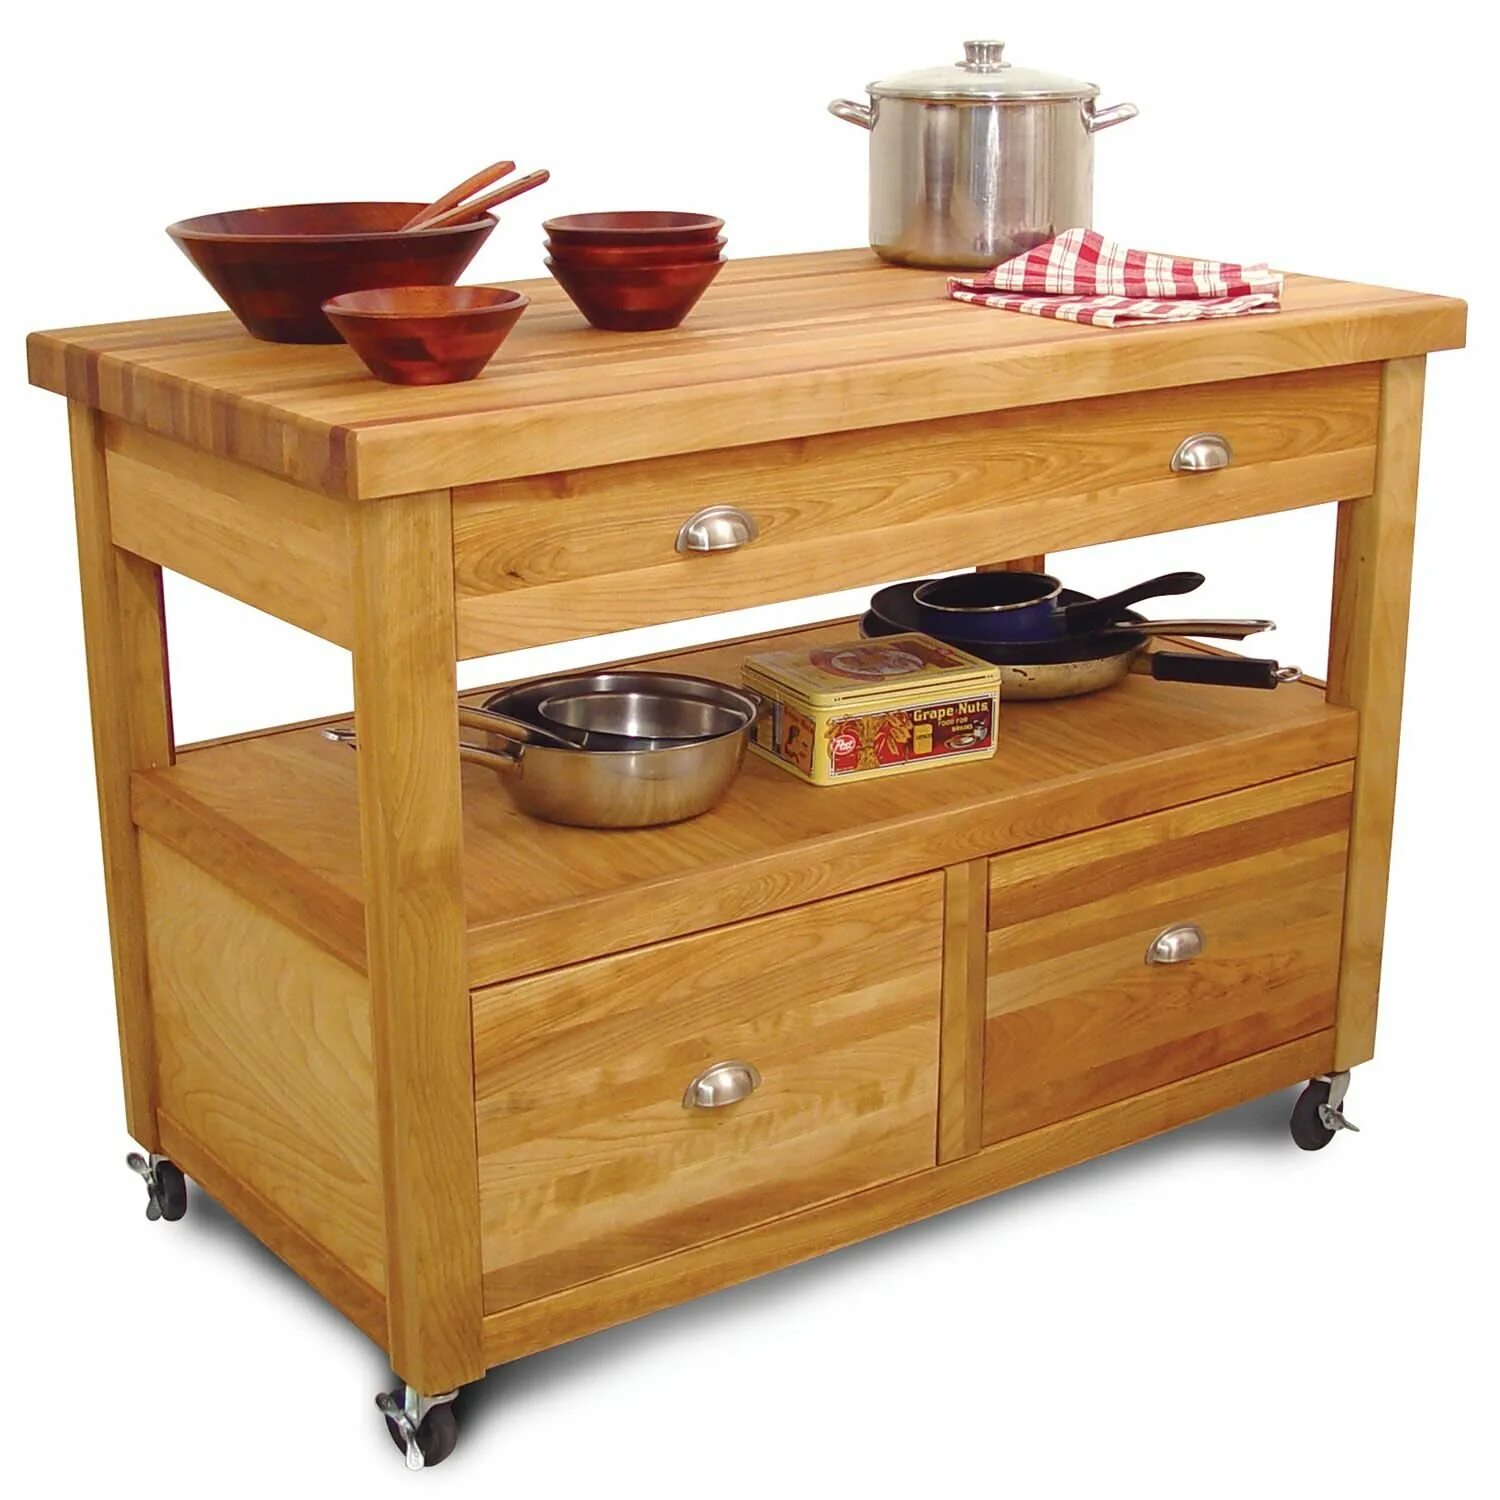 Кухня мебель тумбы. Кухонный разделочный стол. Разделочный столик на колесах для кухни. Стол разделочный деревянный. Тумба на кухню.